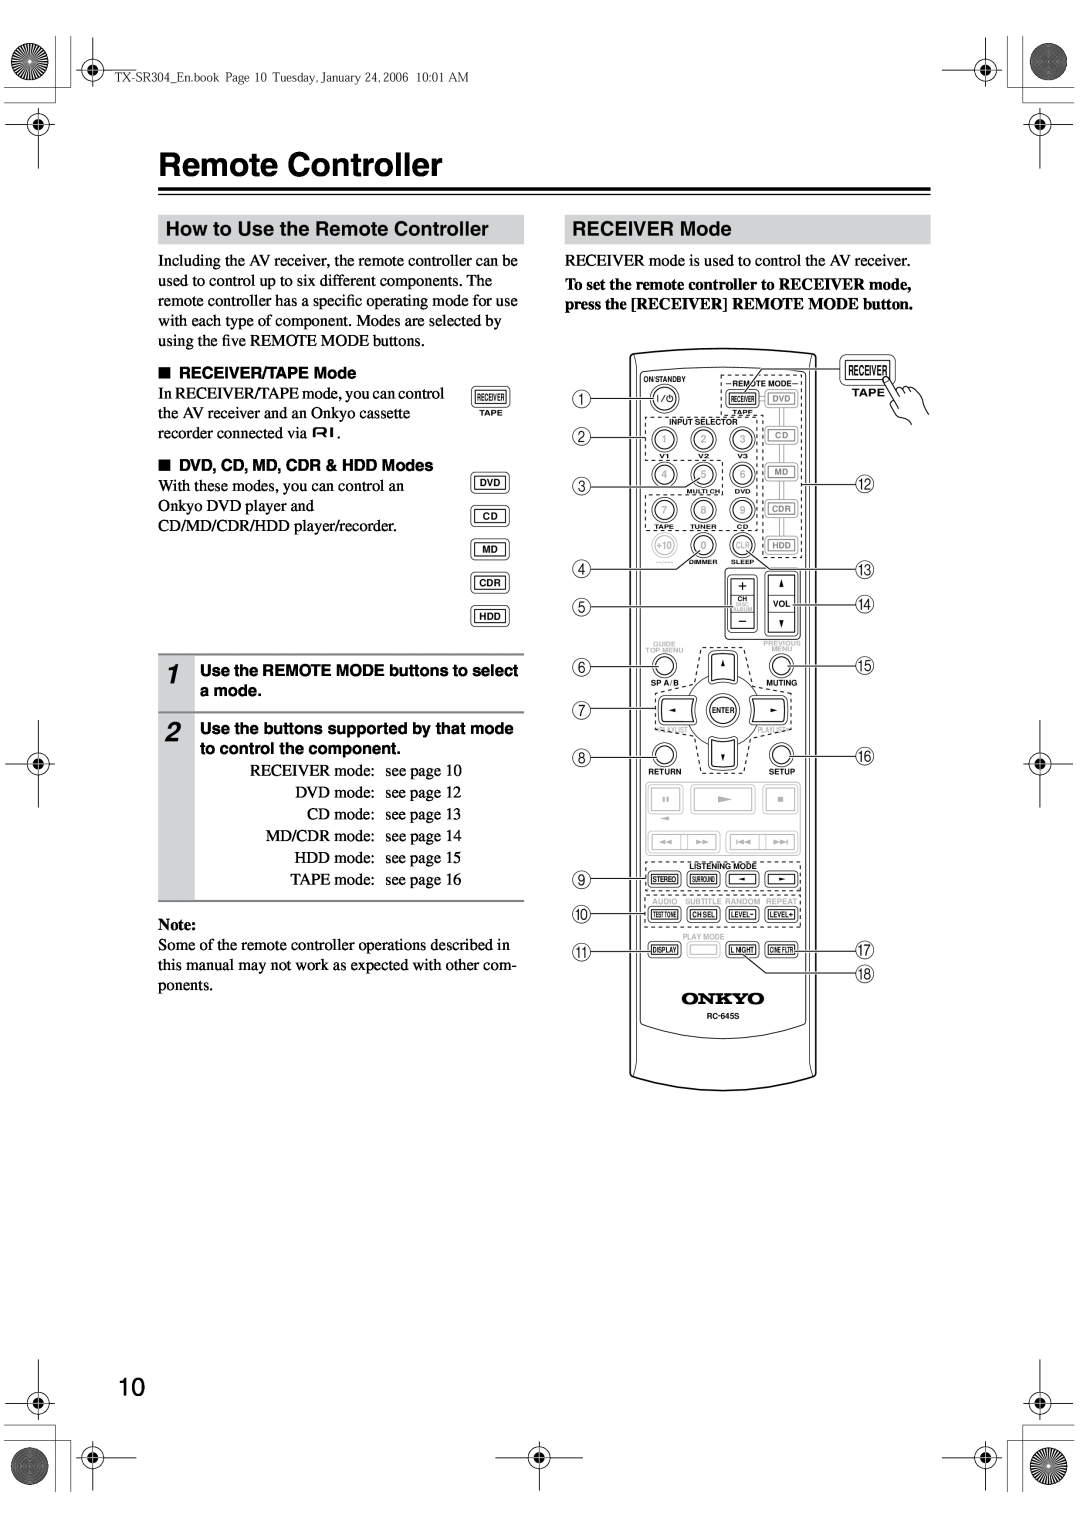 Onkyo TX-SR404, TX-SR8440, TX-SR304E instruction manual How to Use the Remote Controller, RECEIVER Mode 